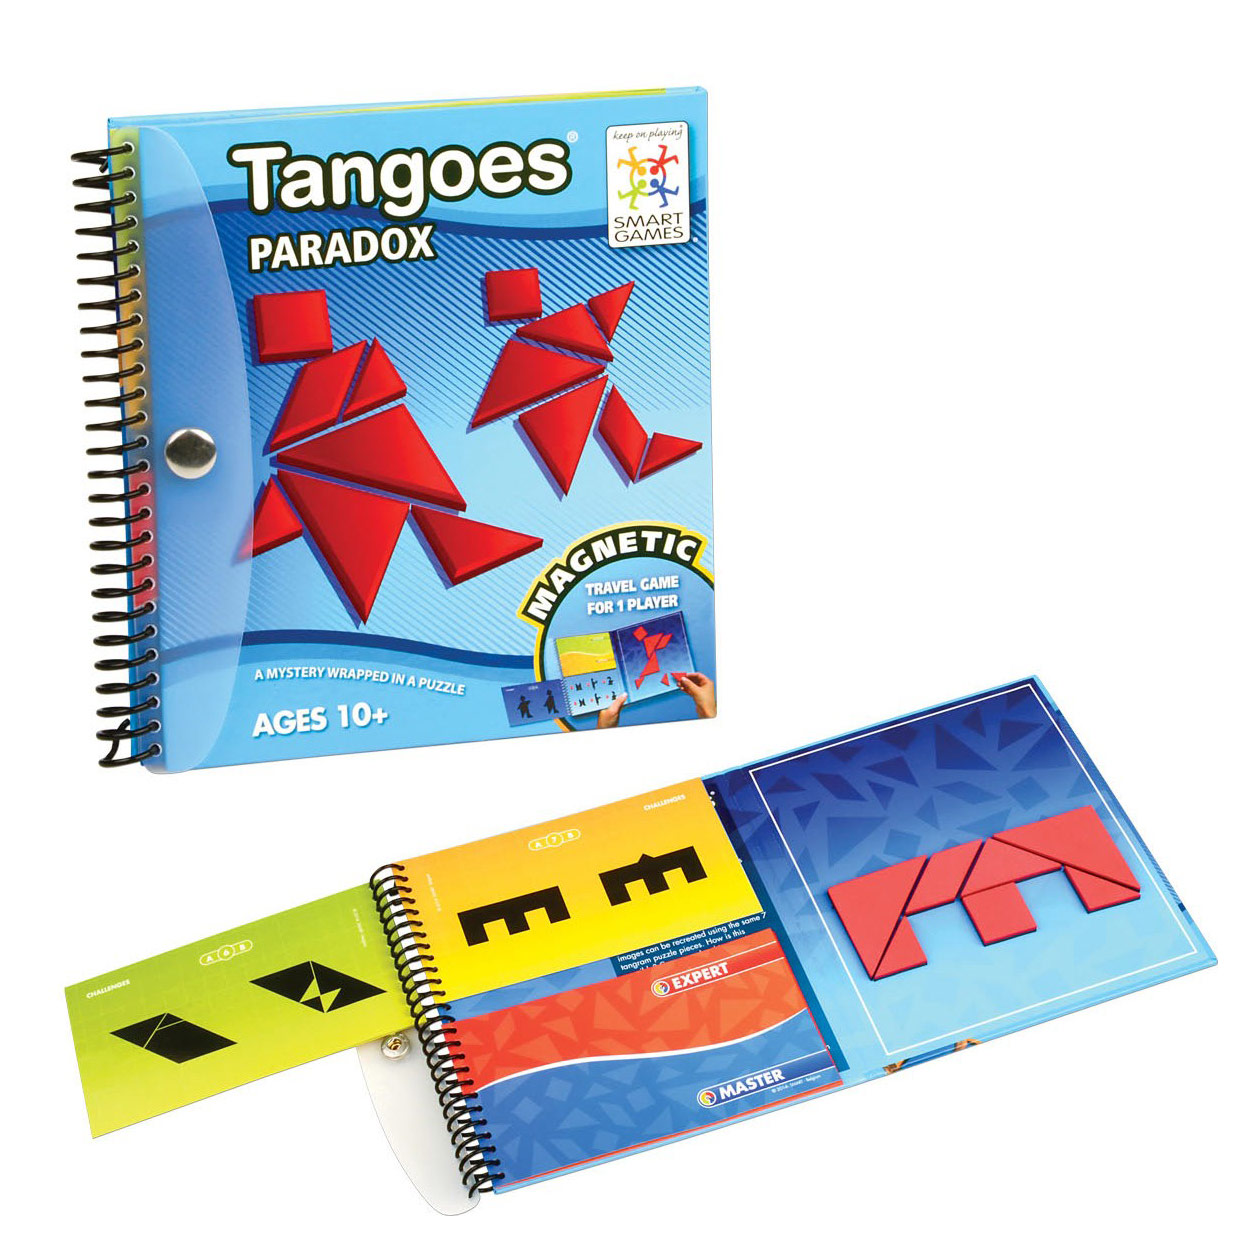 SmartGames Tangram Reisspel - Tangoes Paradox